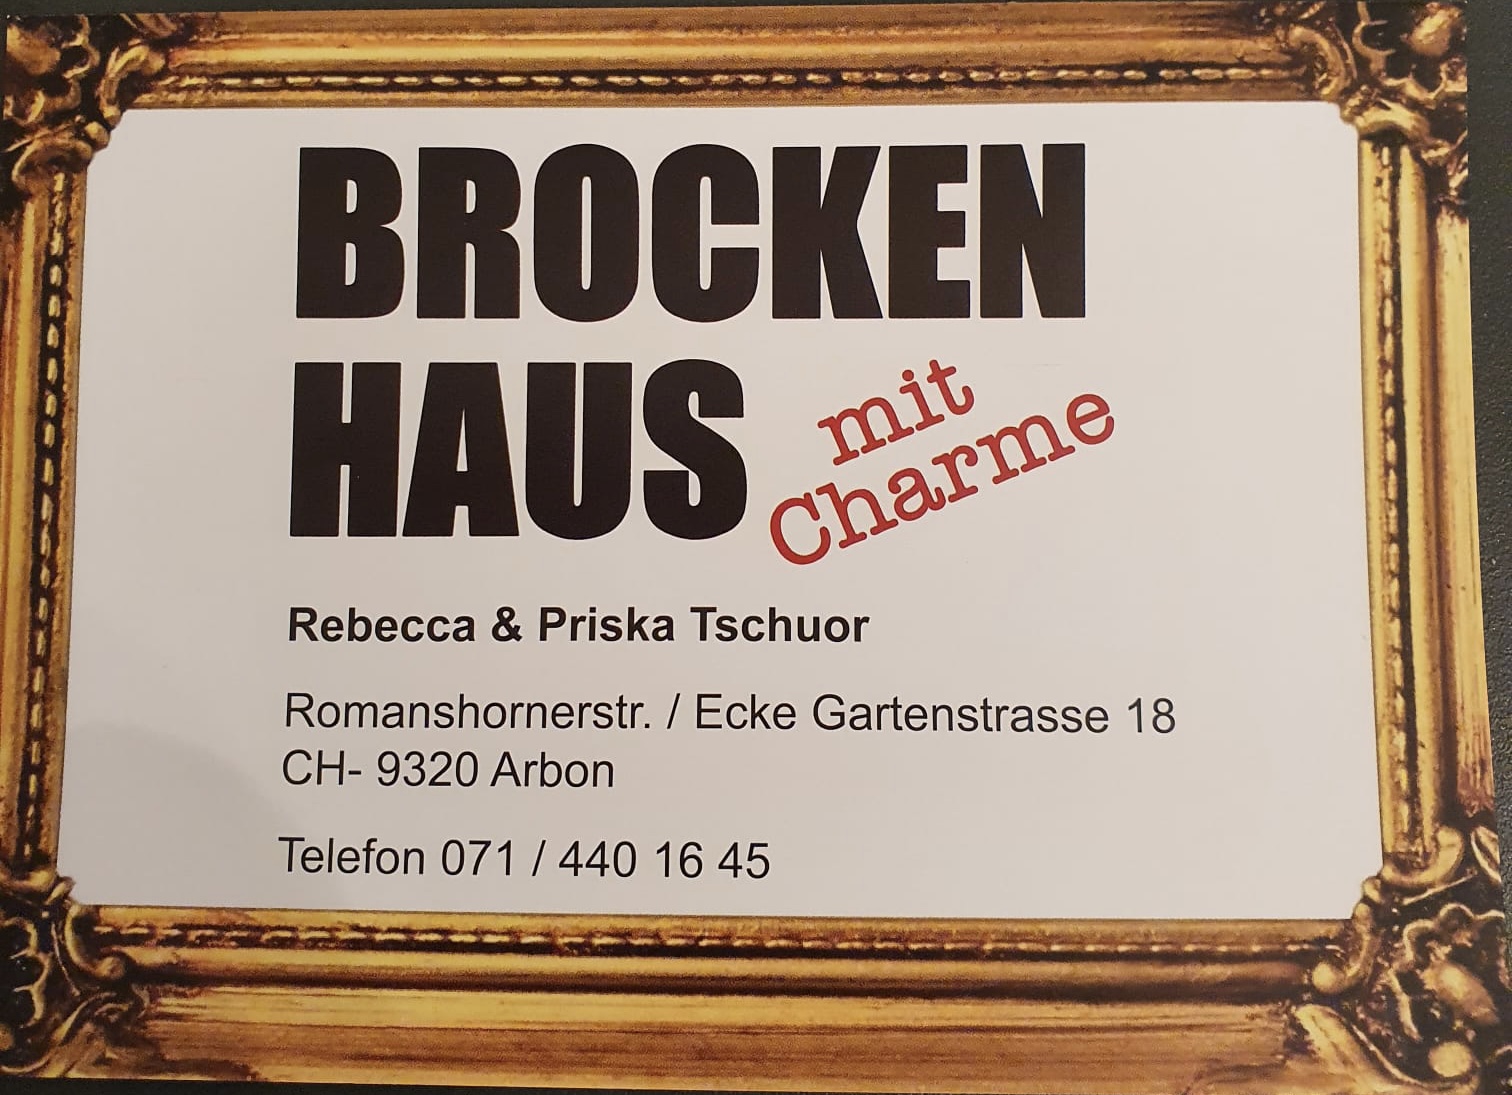 Brockenhaus mit Charme